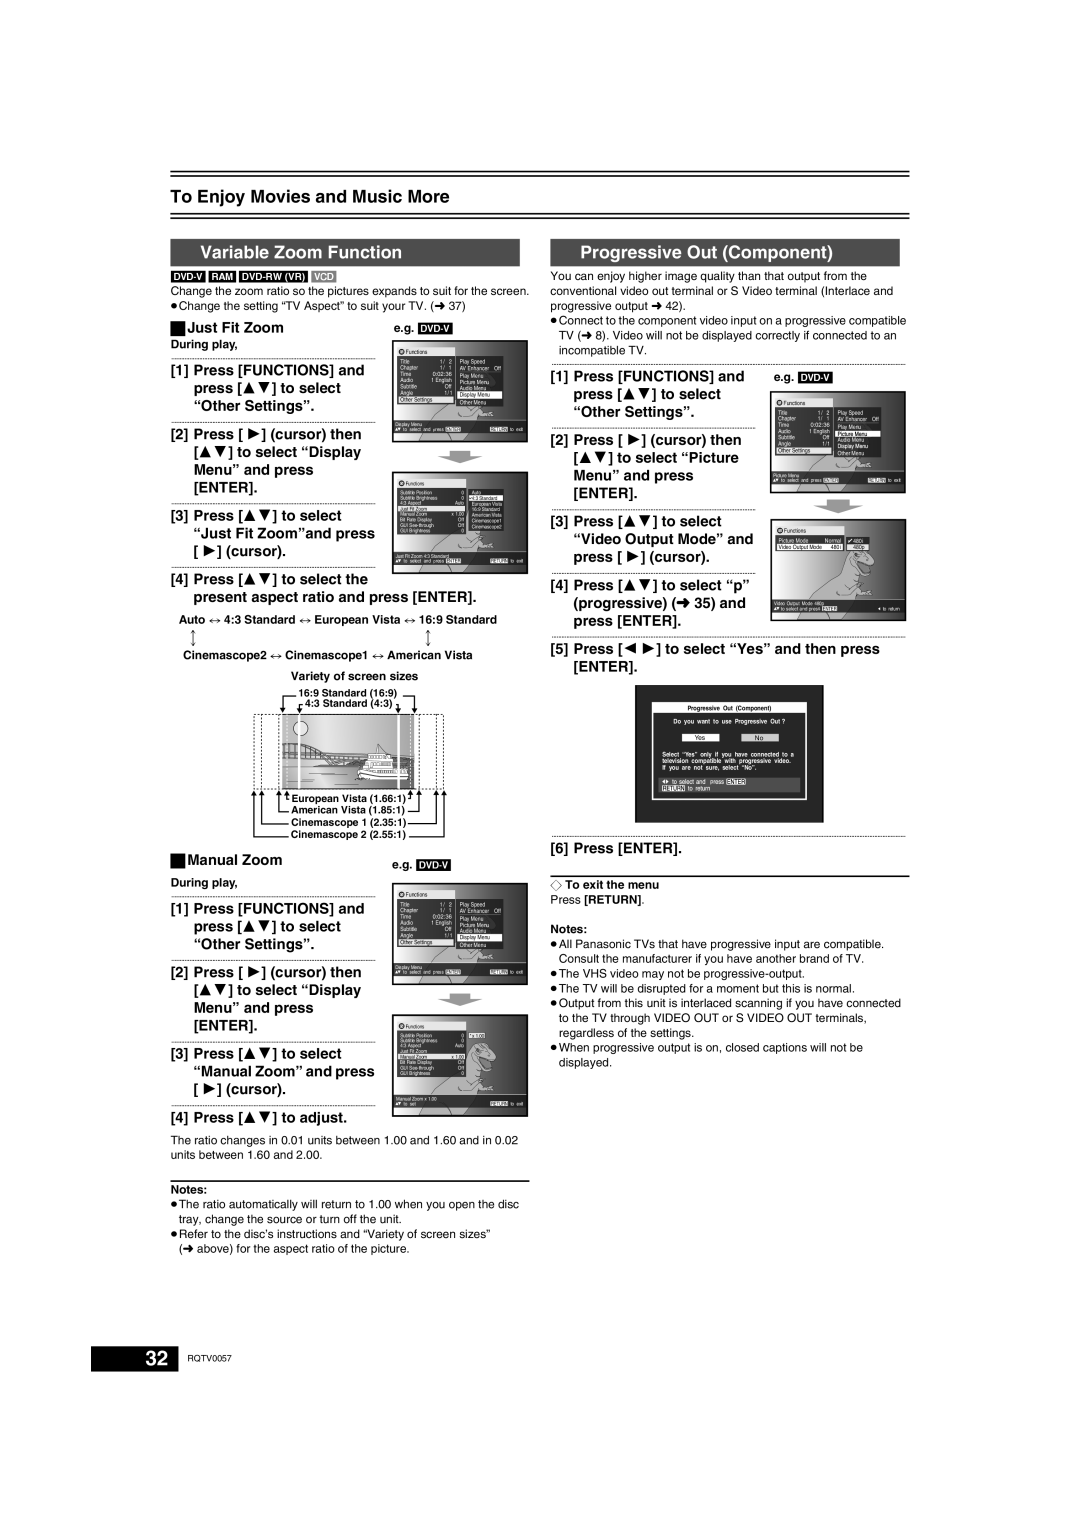 Panasonic NV-VP33 Series Variable Zoom Function, Progressive Out Component, press 1 cursor, ª Manual Zoom, Press ENTER 